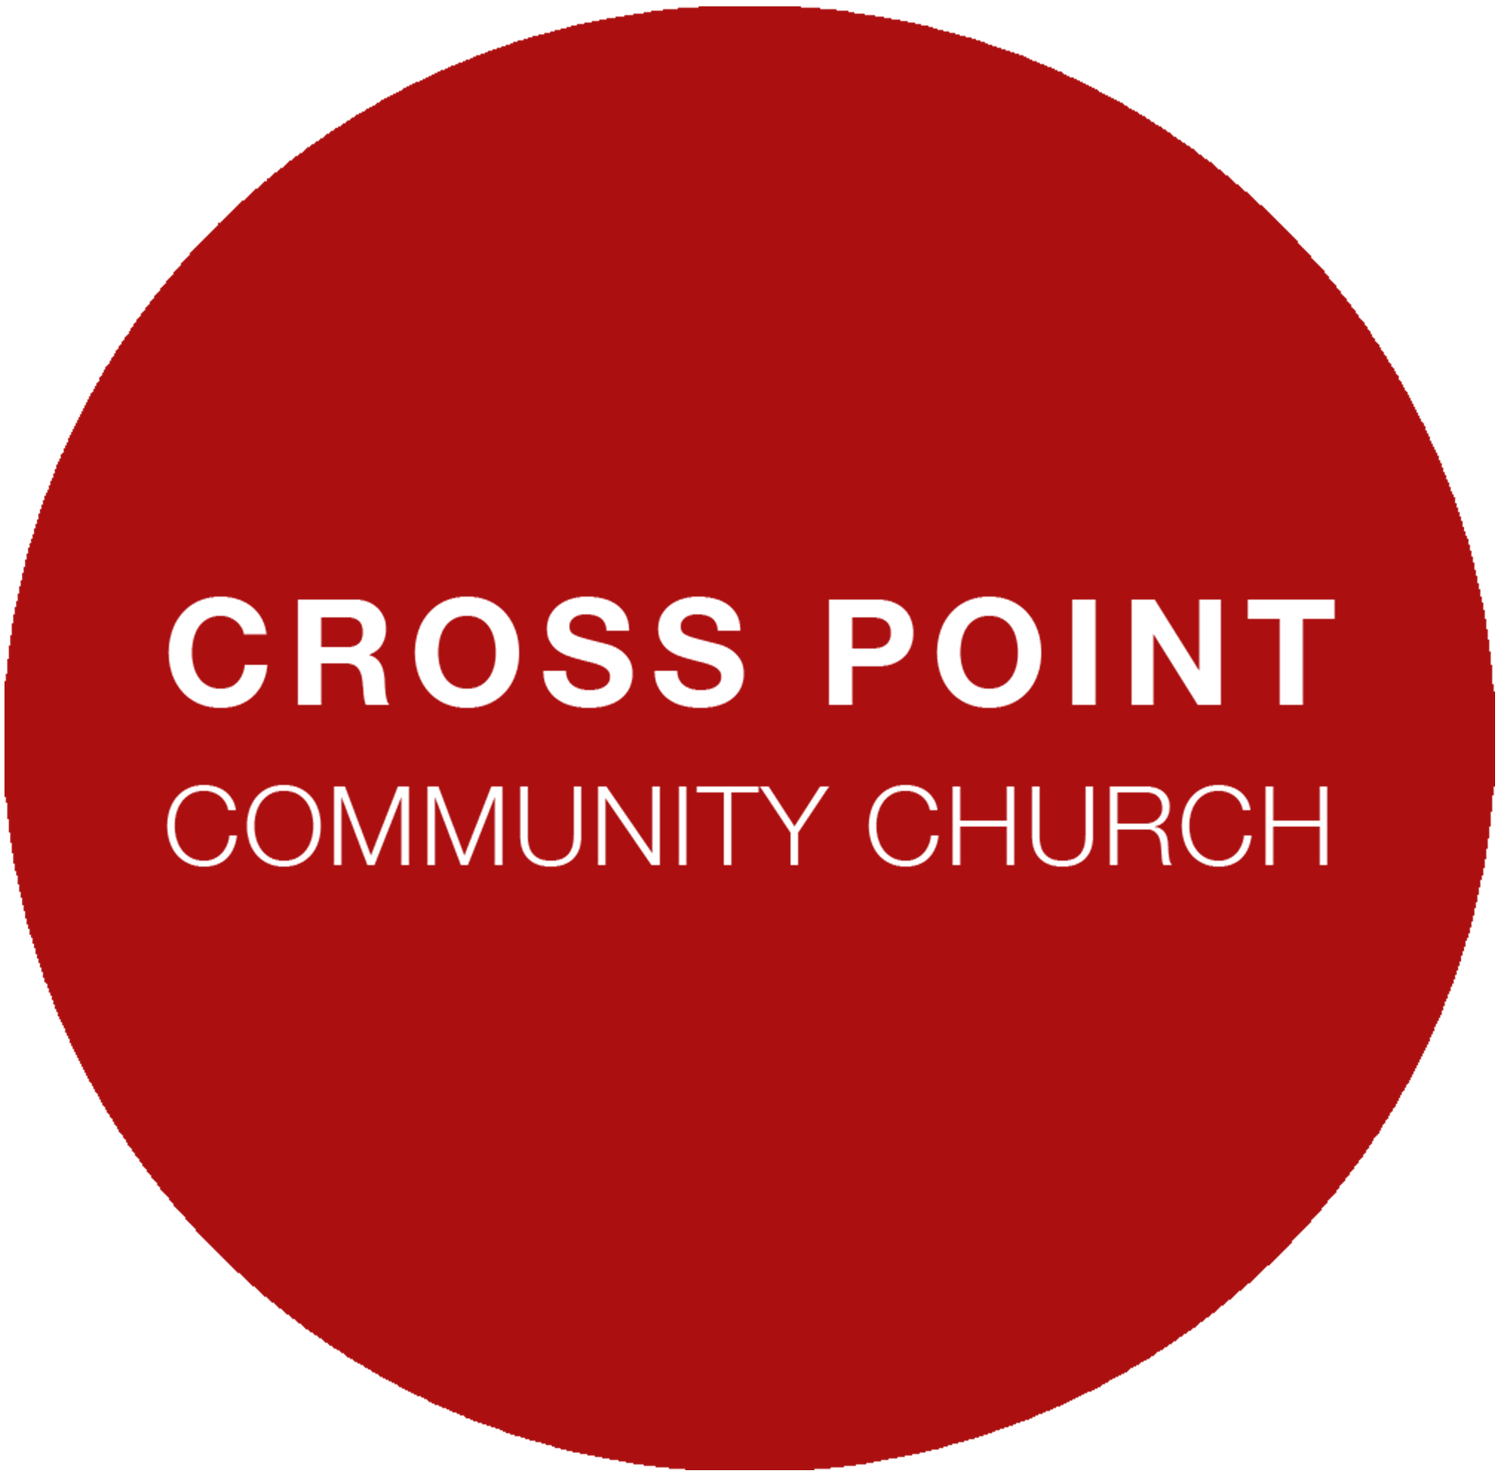 Cross Point Community